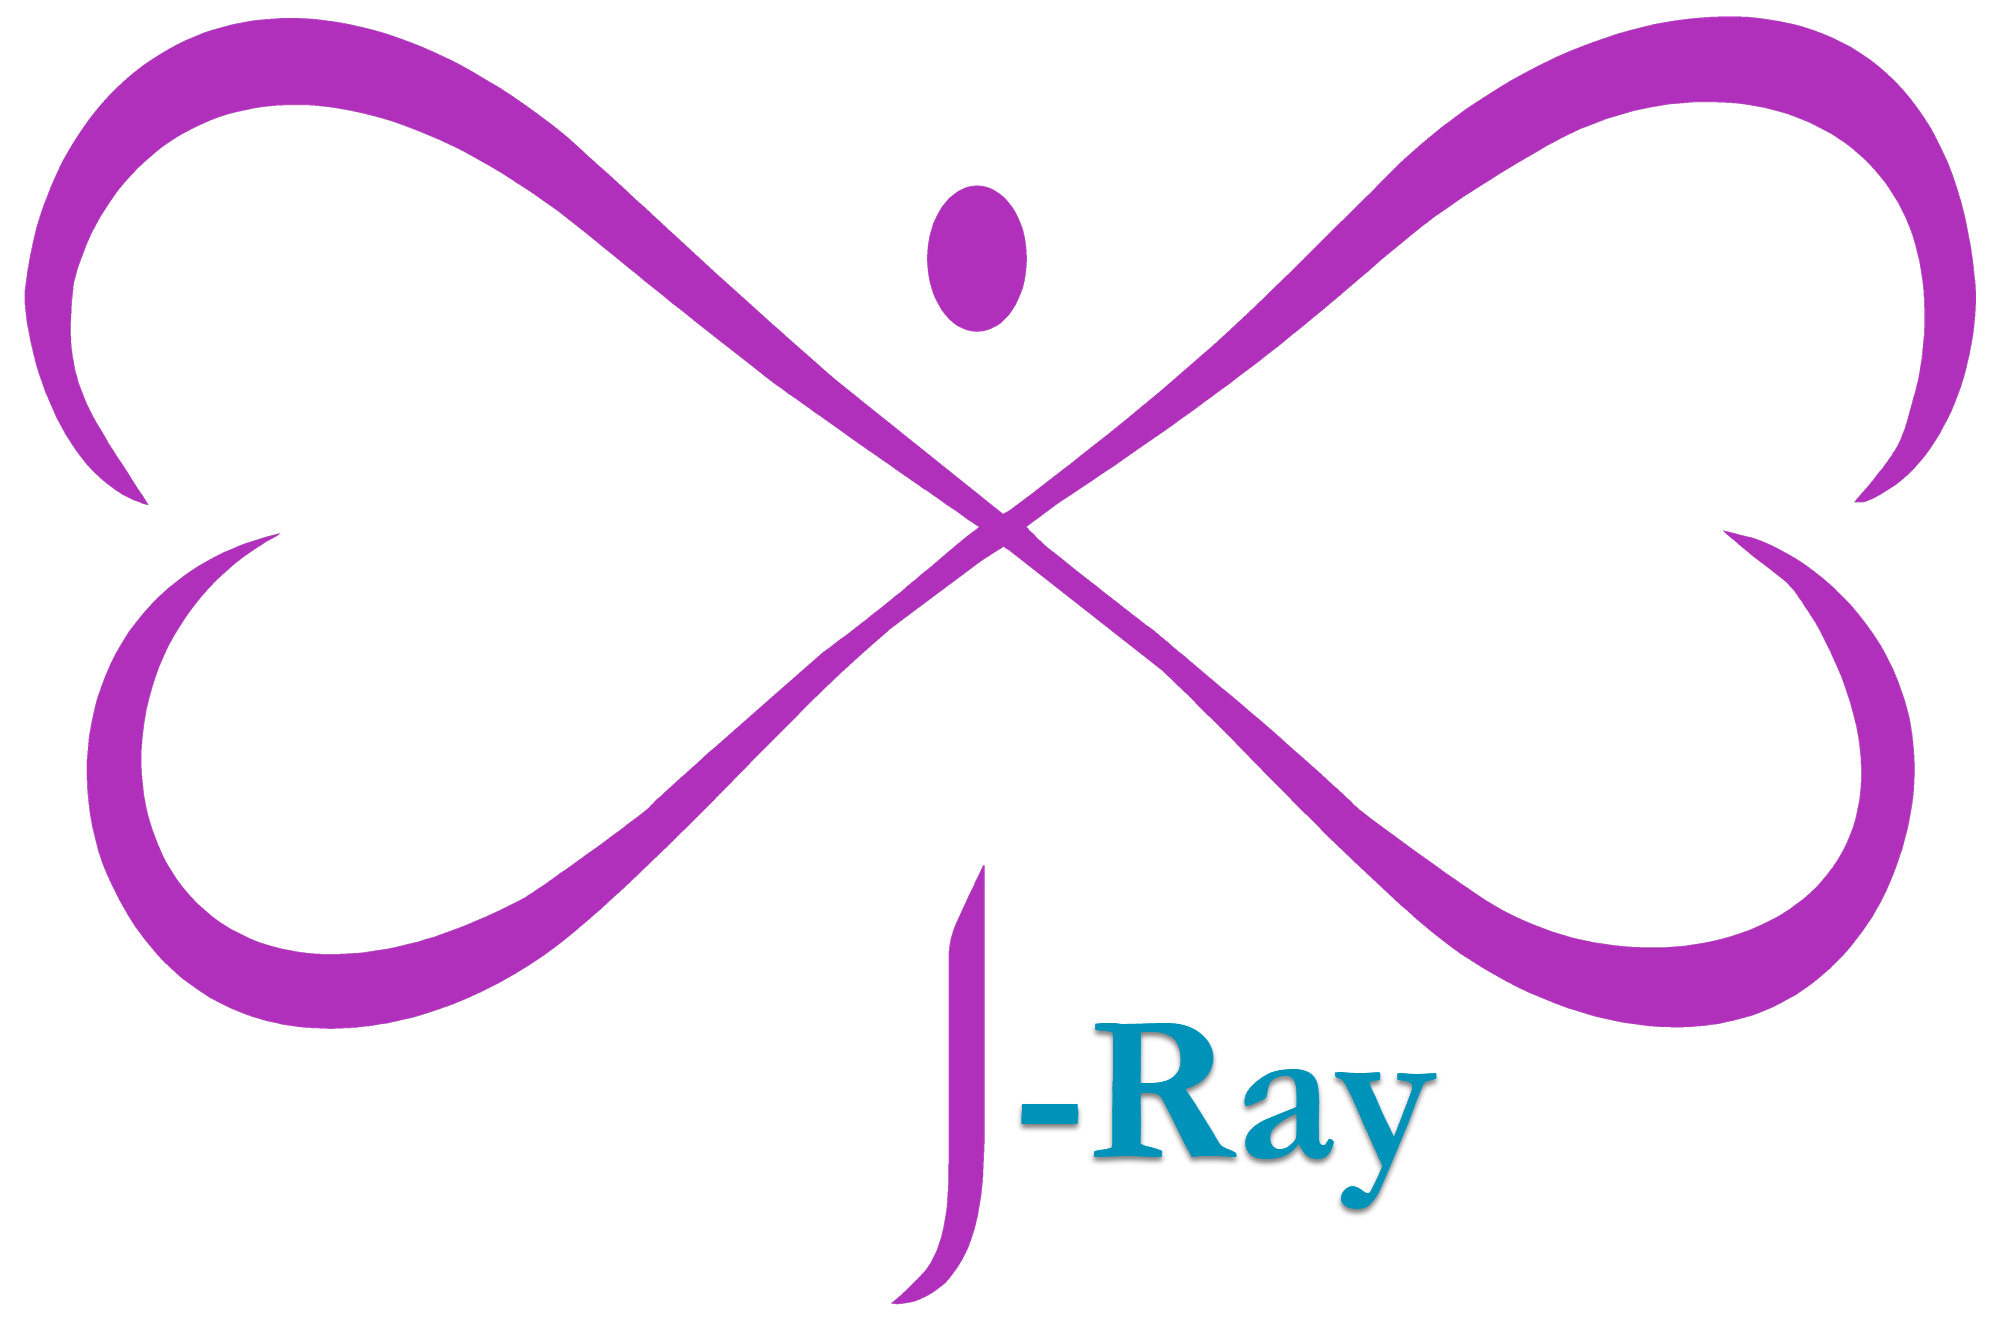 J-Ray Laser System